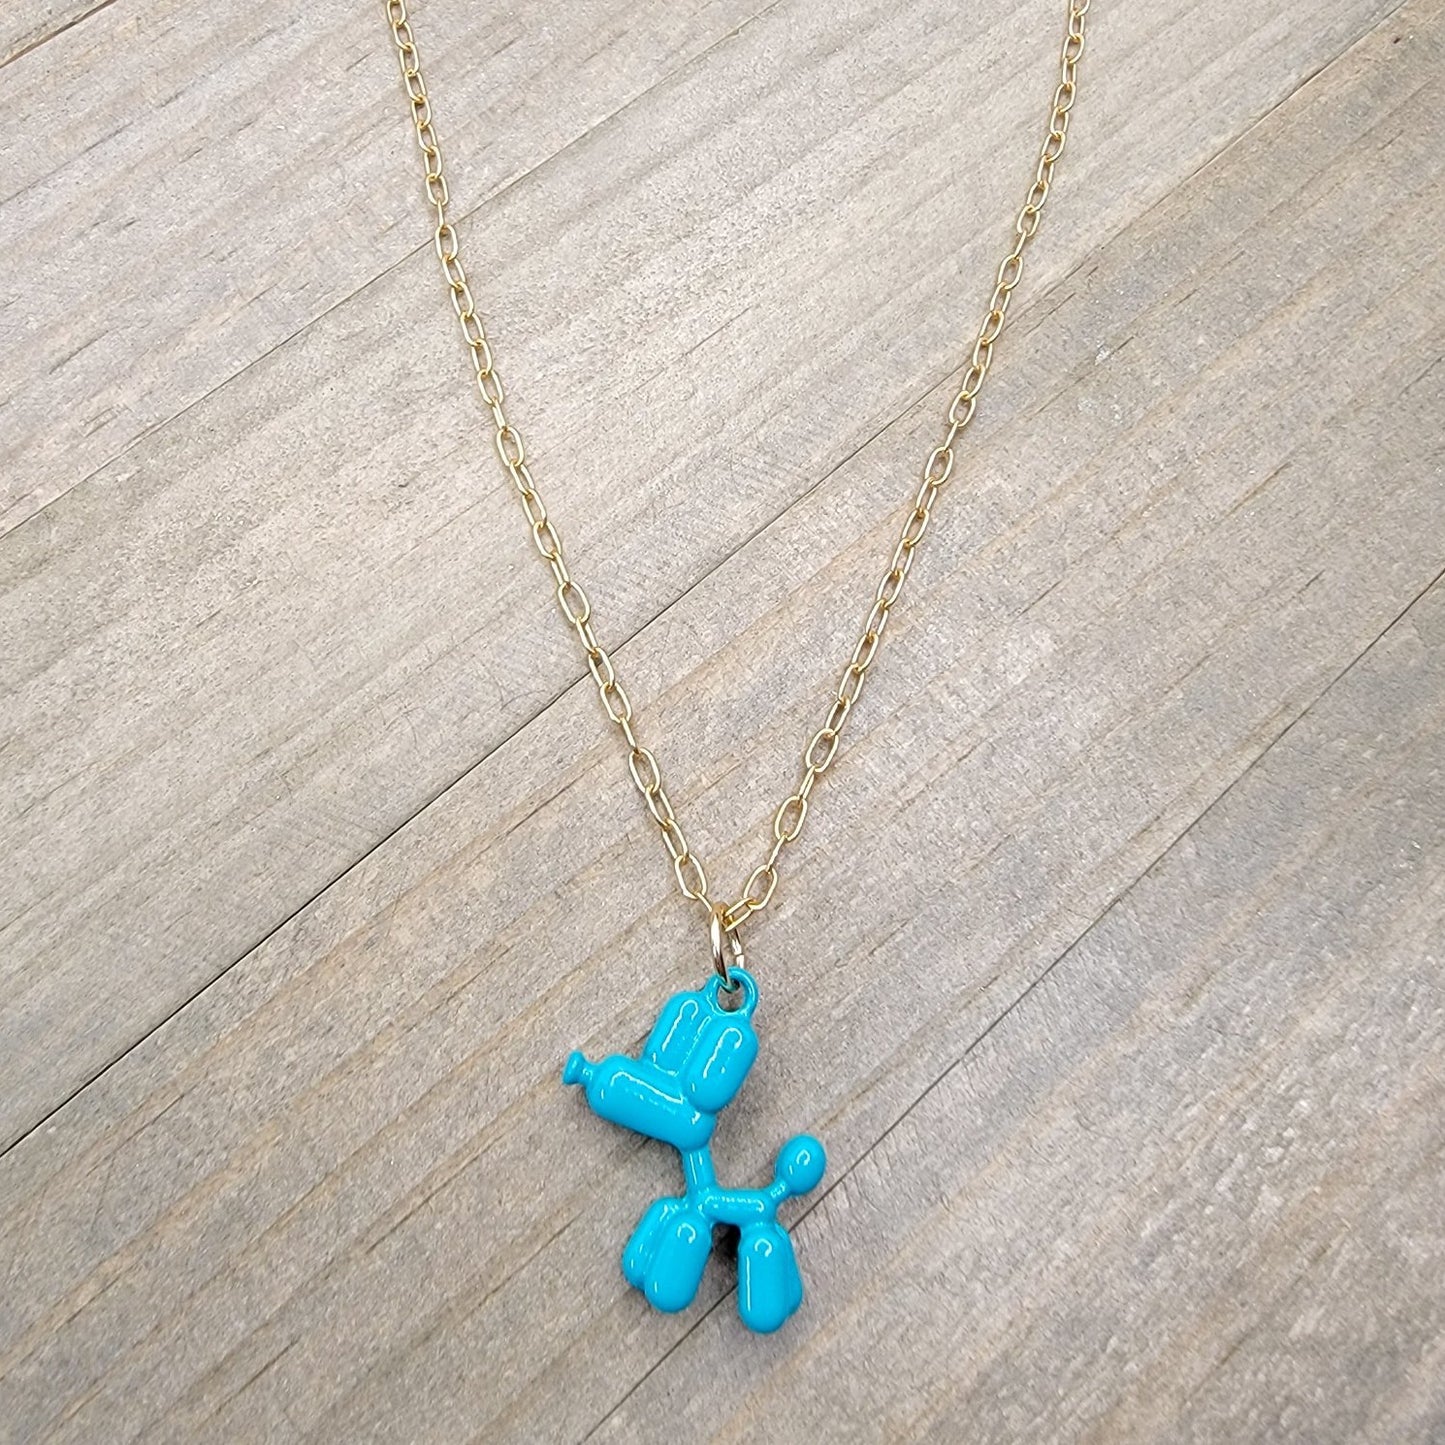 Blue Balloon Dog Necklace - Nicki Lynn Jewelry